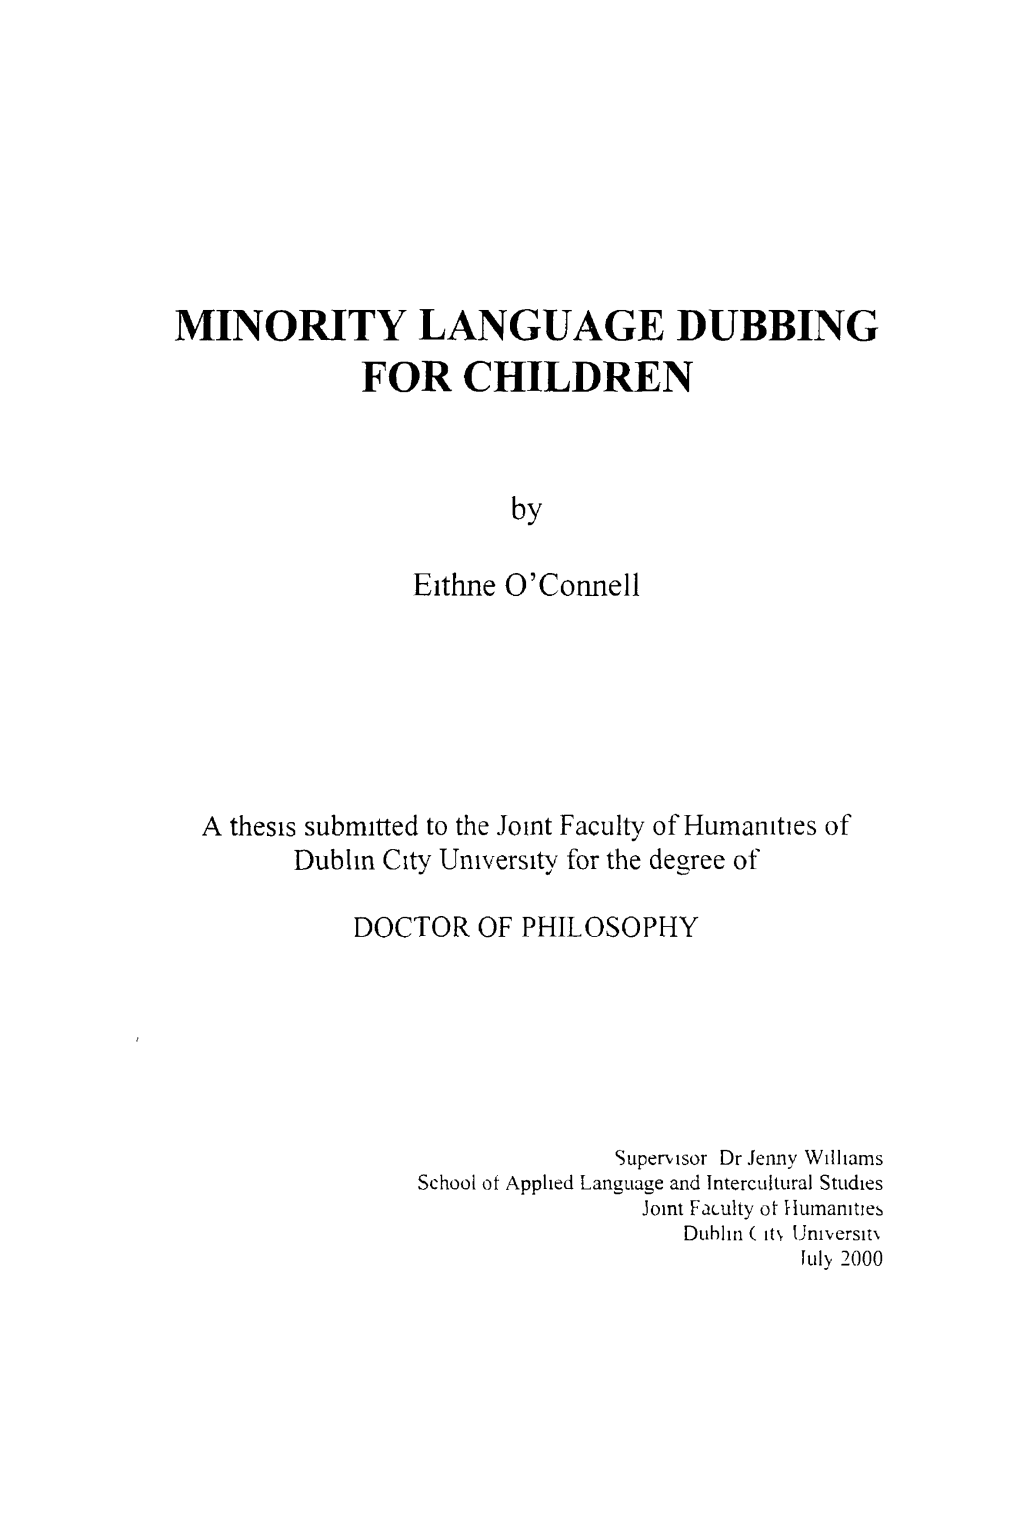 Minority Language Dubbing for Children